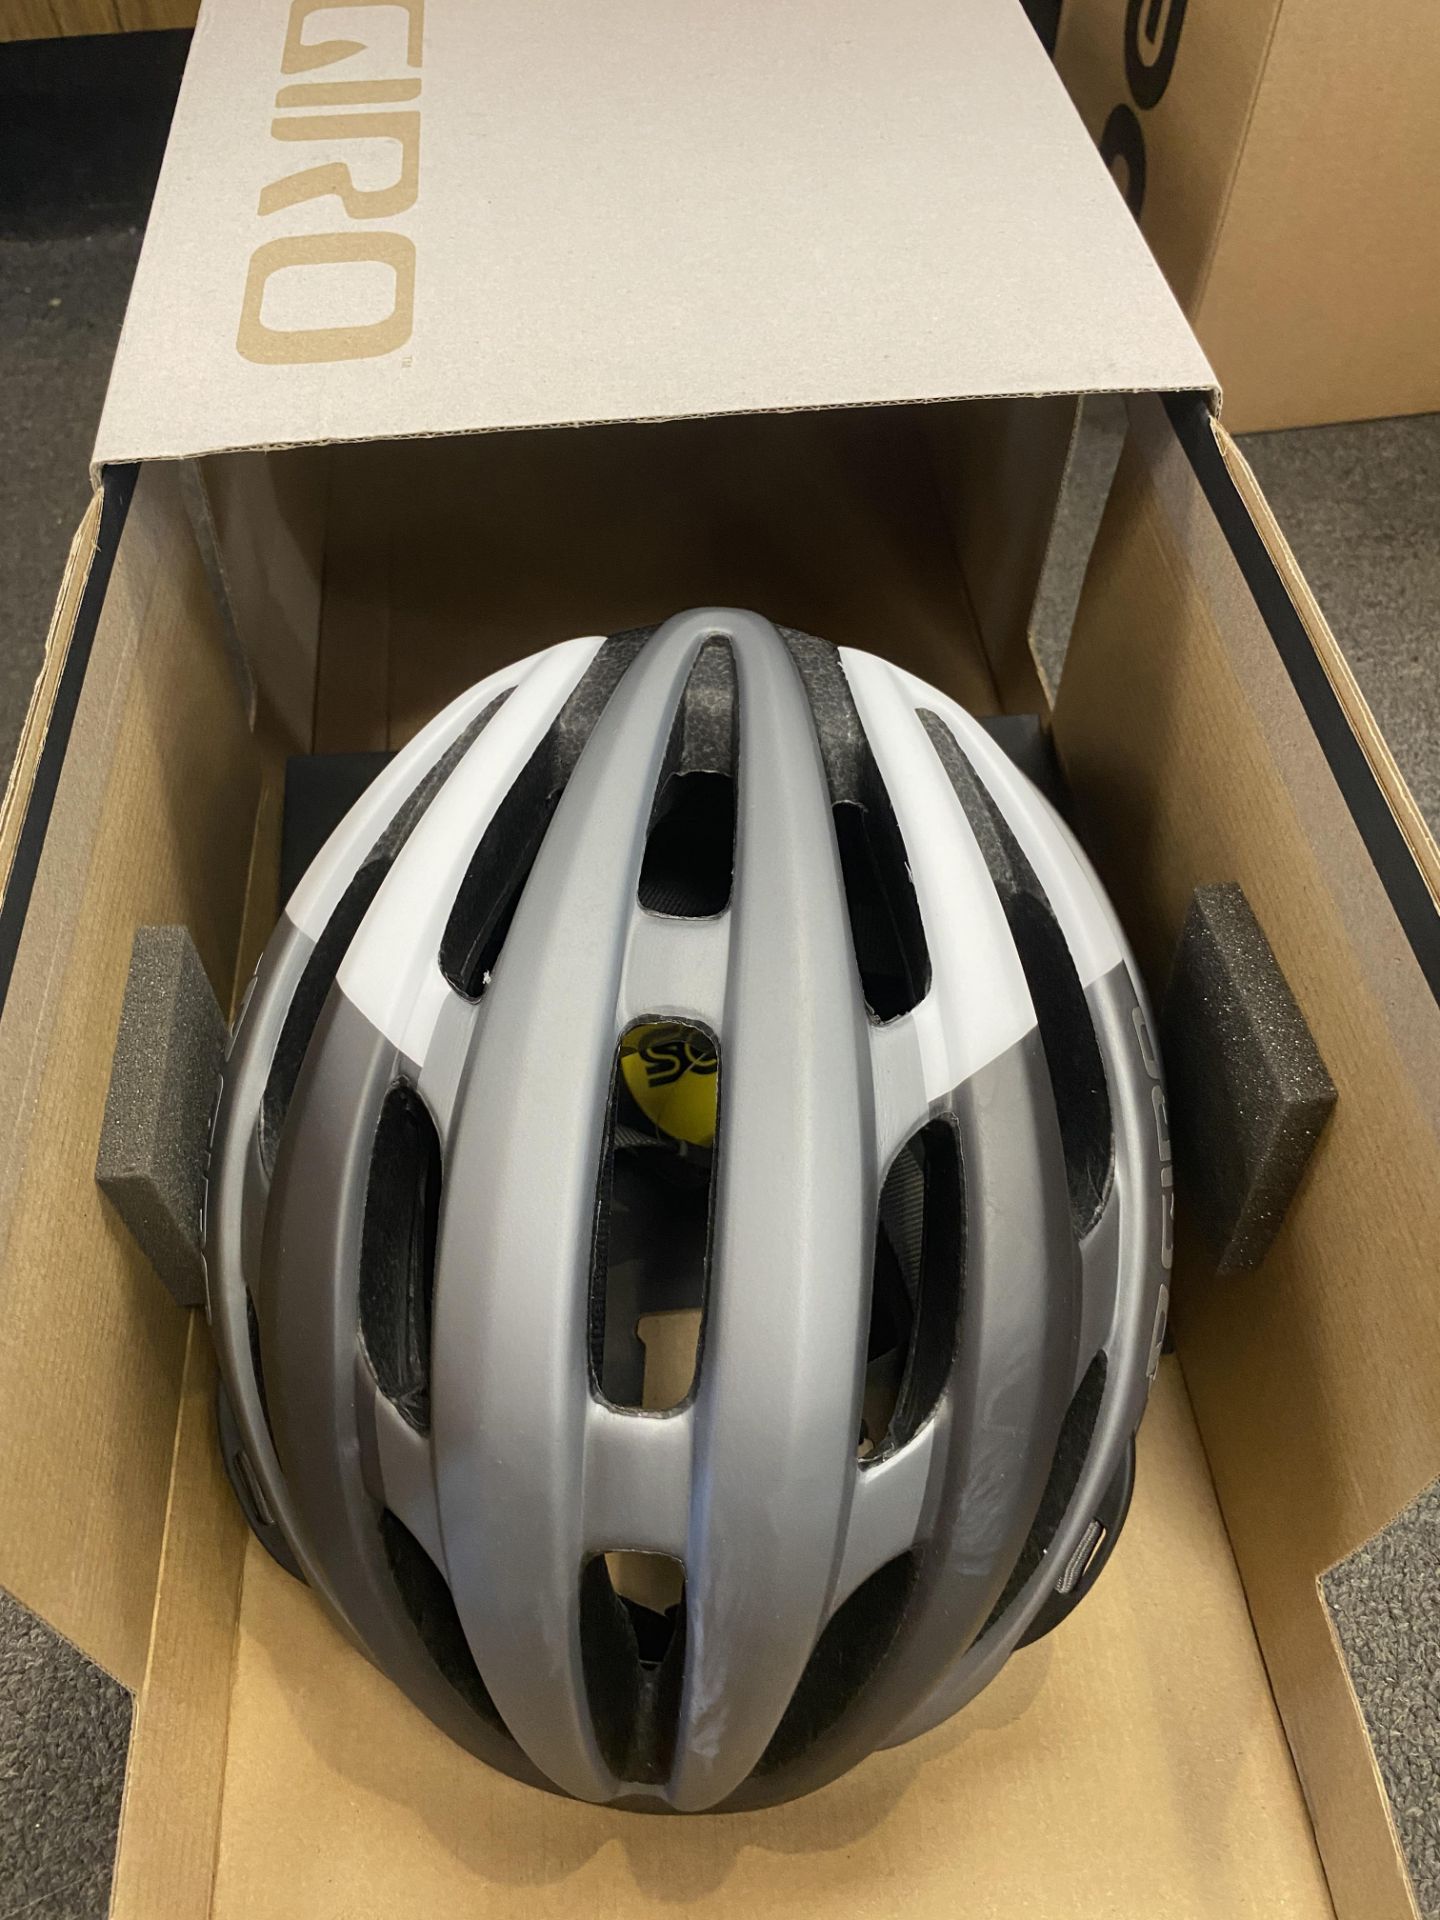 Giro Foray Adult Med. Helmet $85 Retail